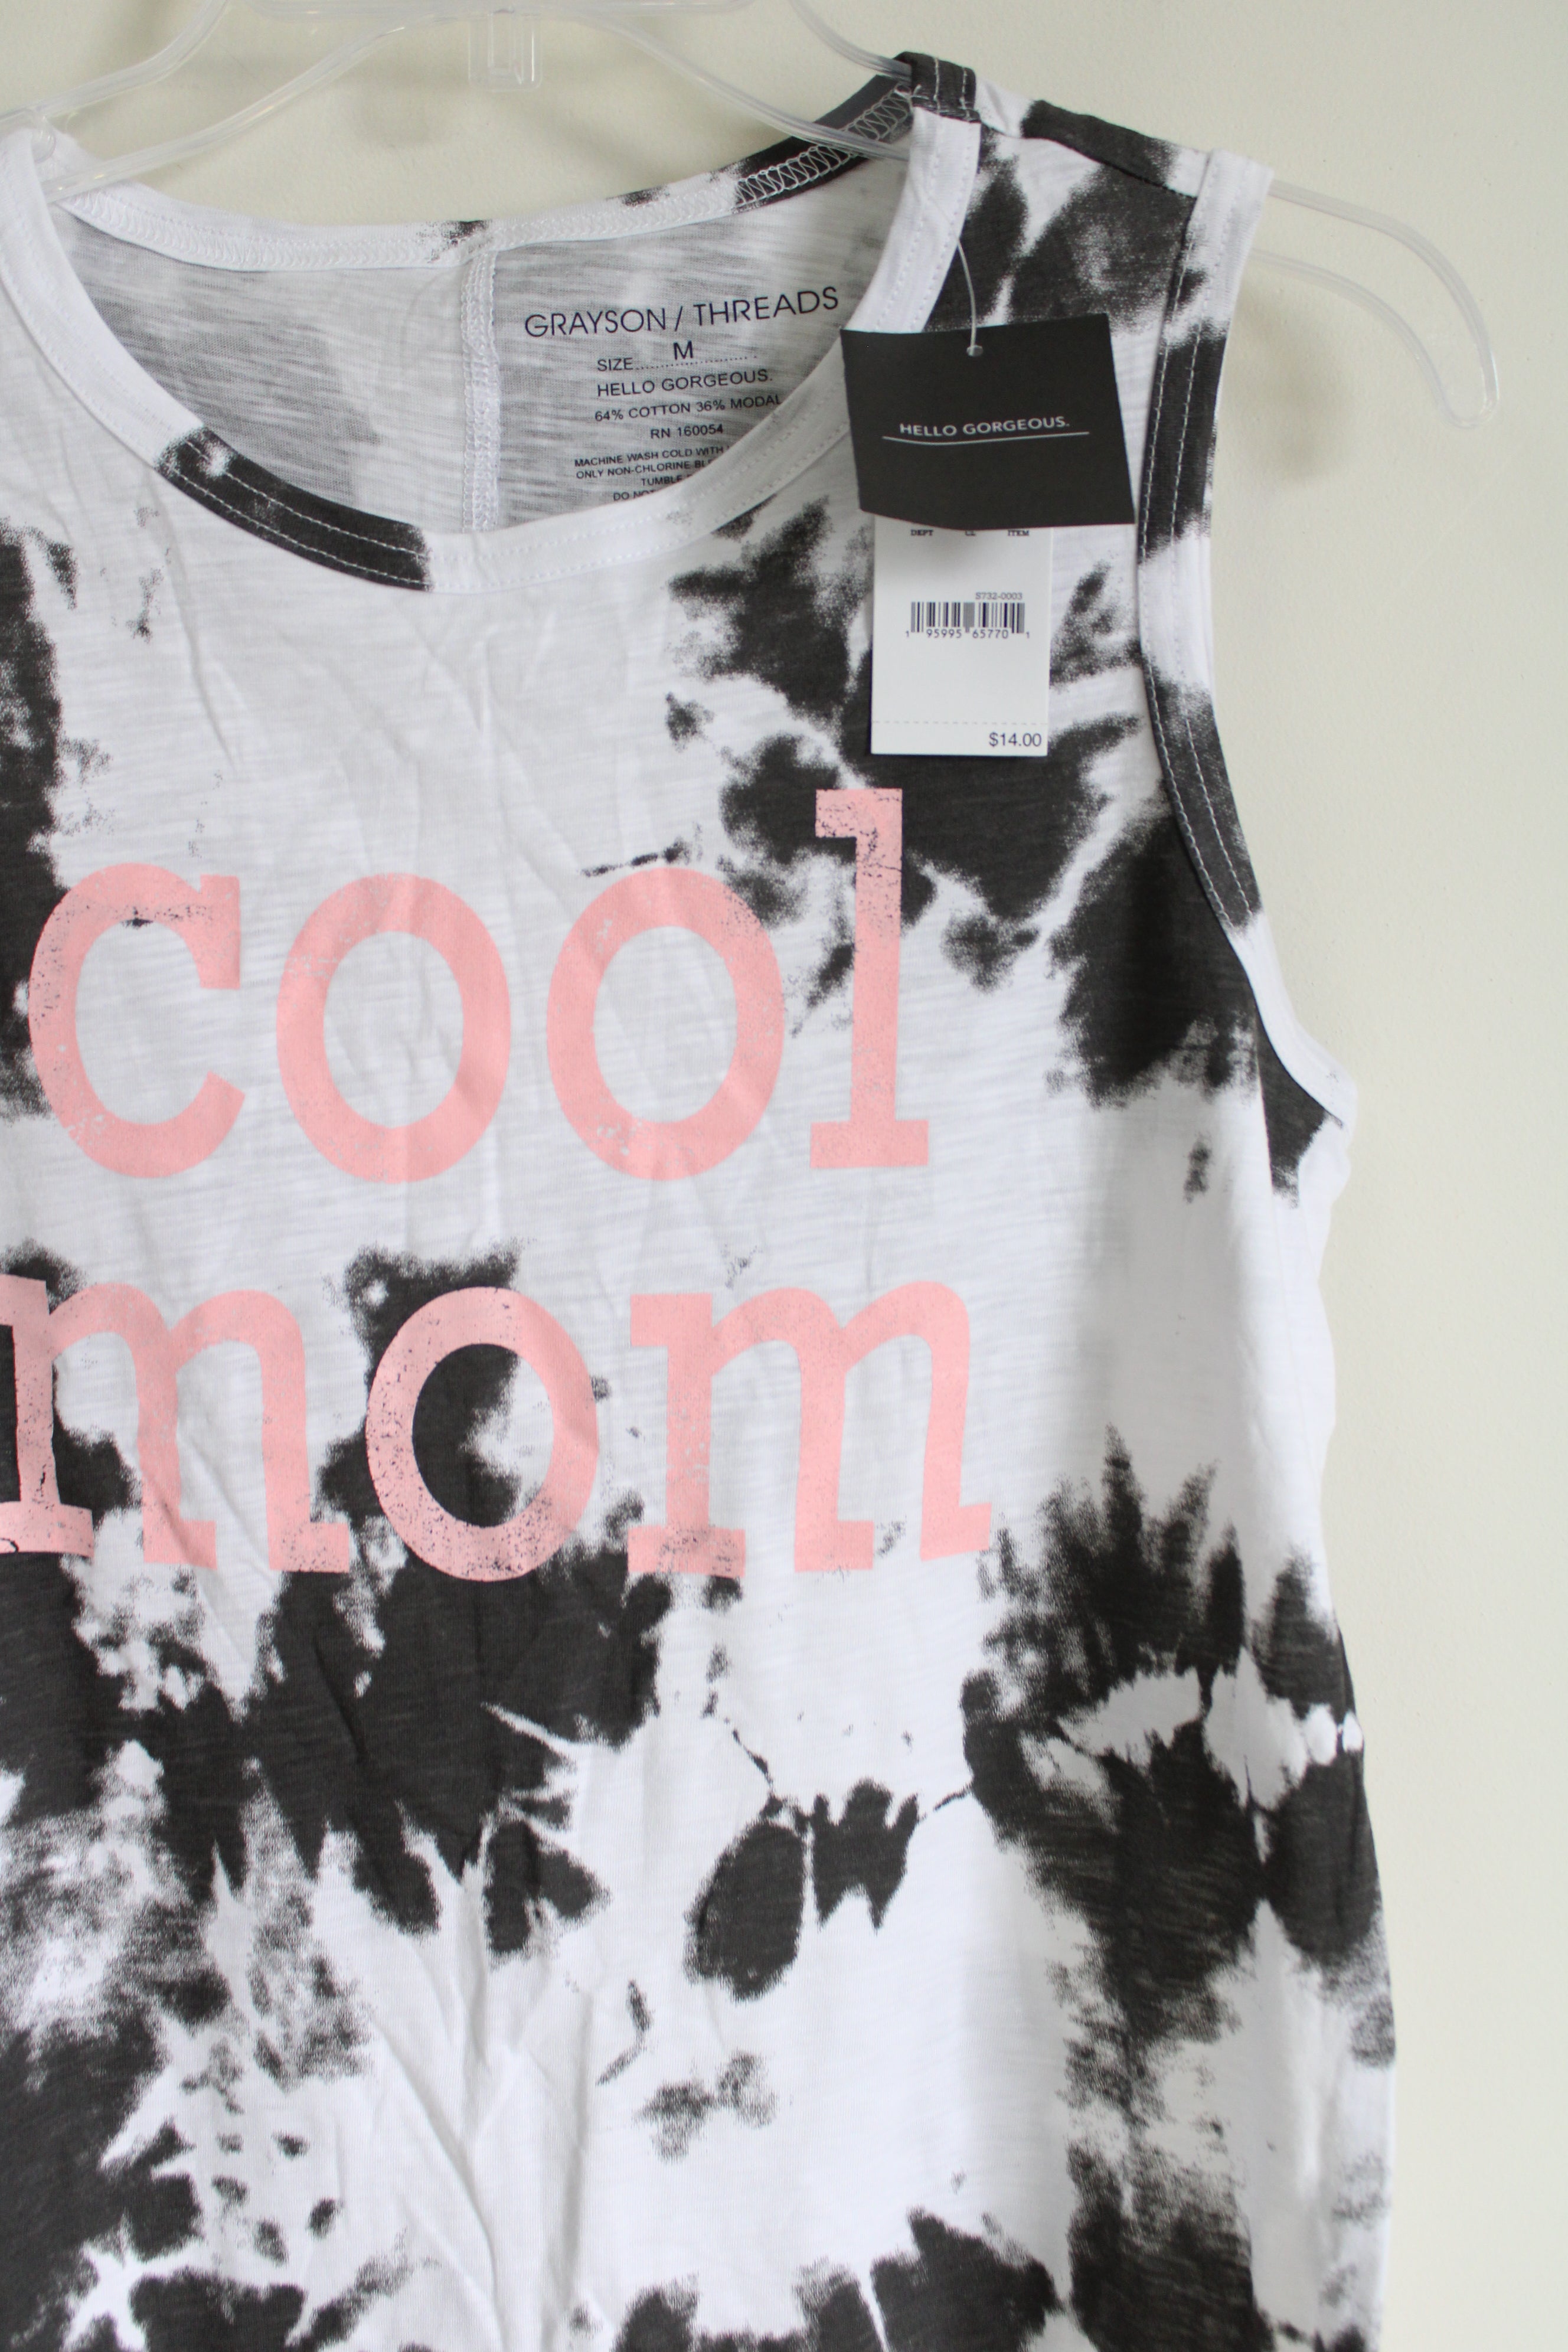 NEW Grayson Threads "Cool Mom" Tie Dye Tank